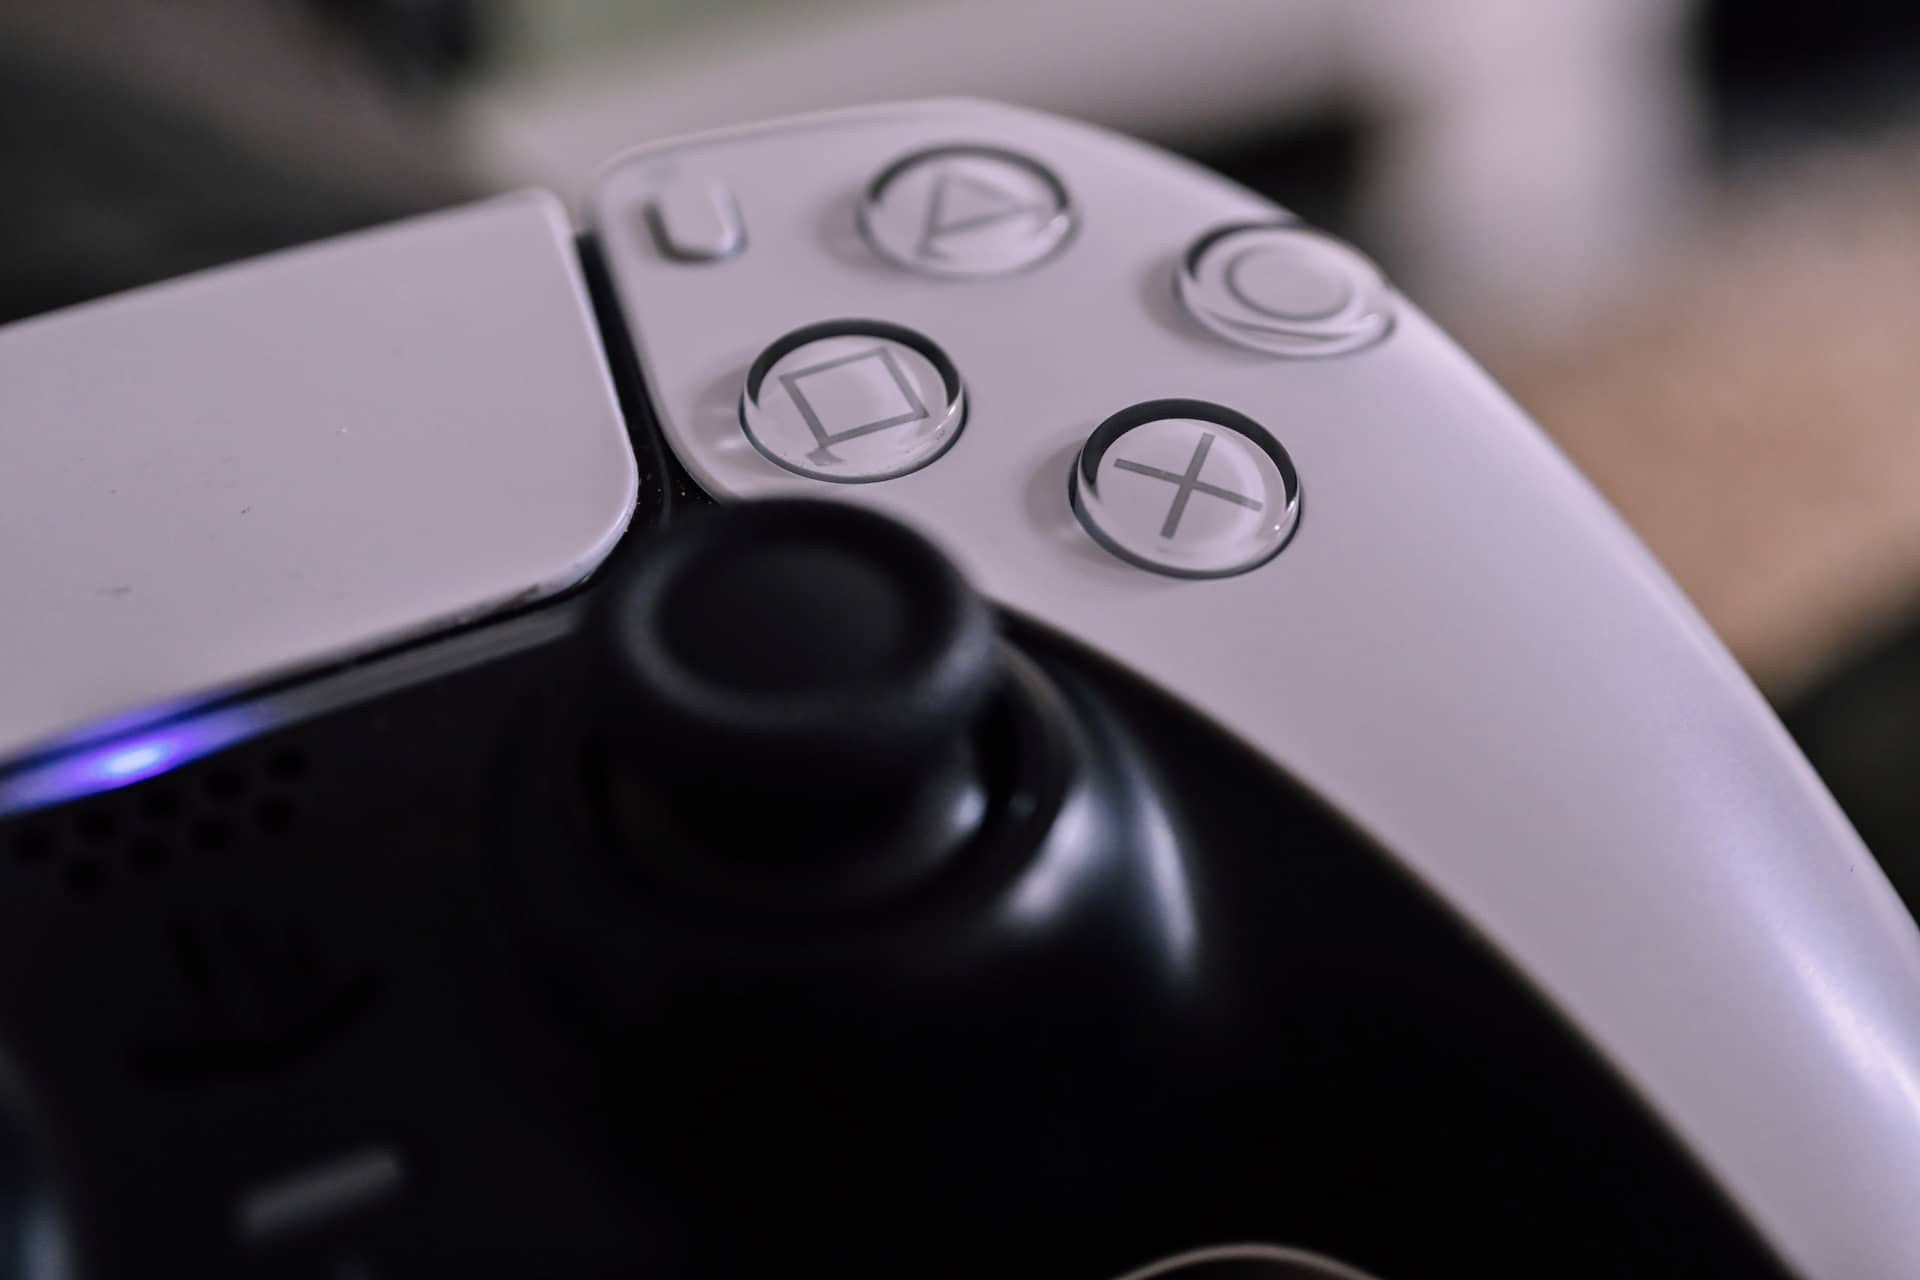 PS4 Pro: confira vídeos sobre detalhes e jogos testados no novo console da  Sony 